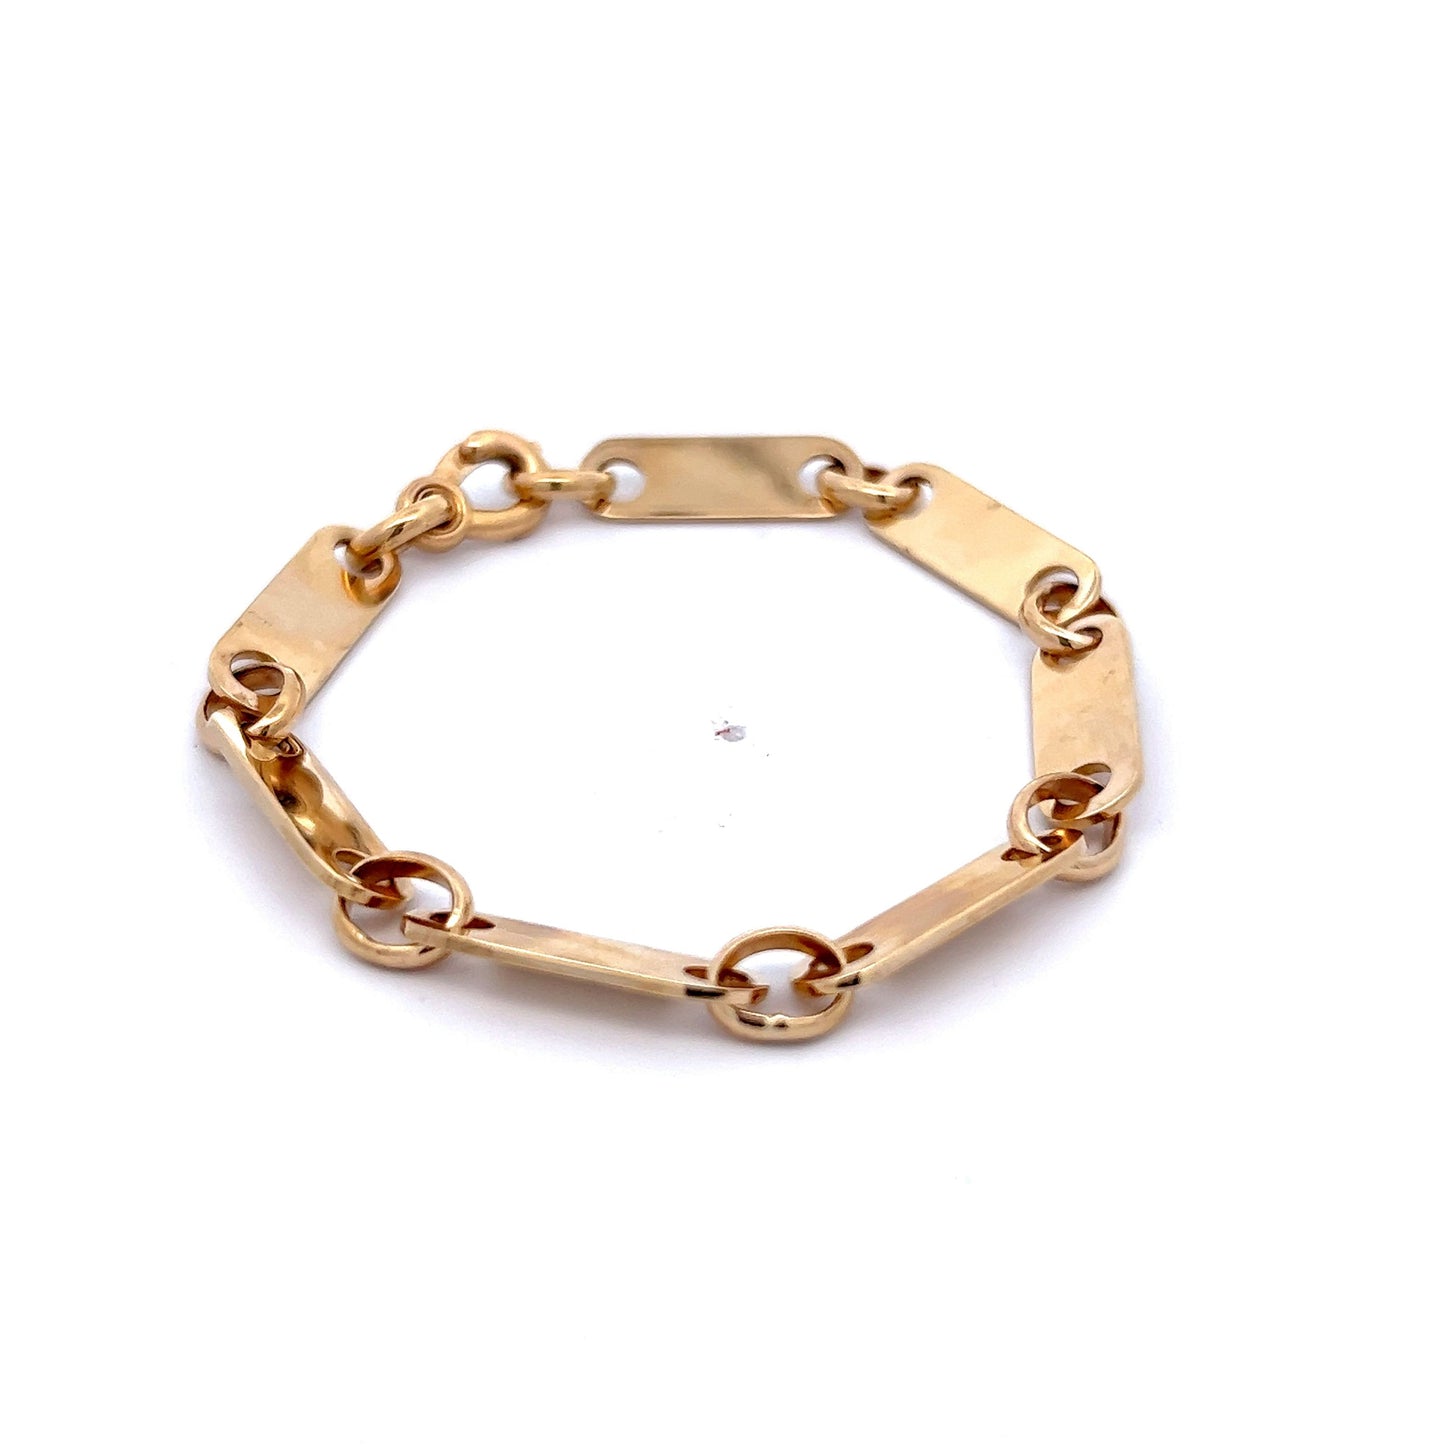 Mariner Link Chain Bracelet in 14k Yellow Gold